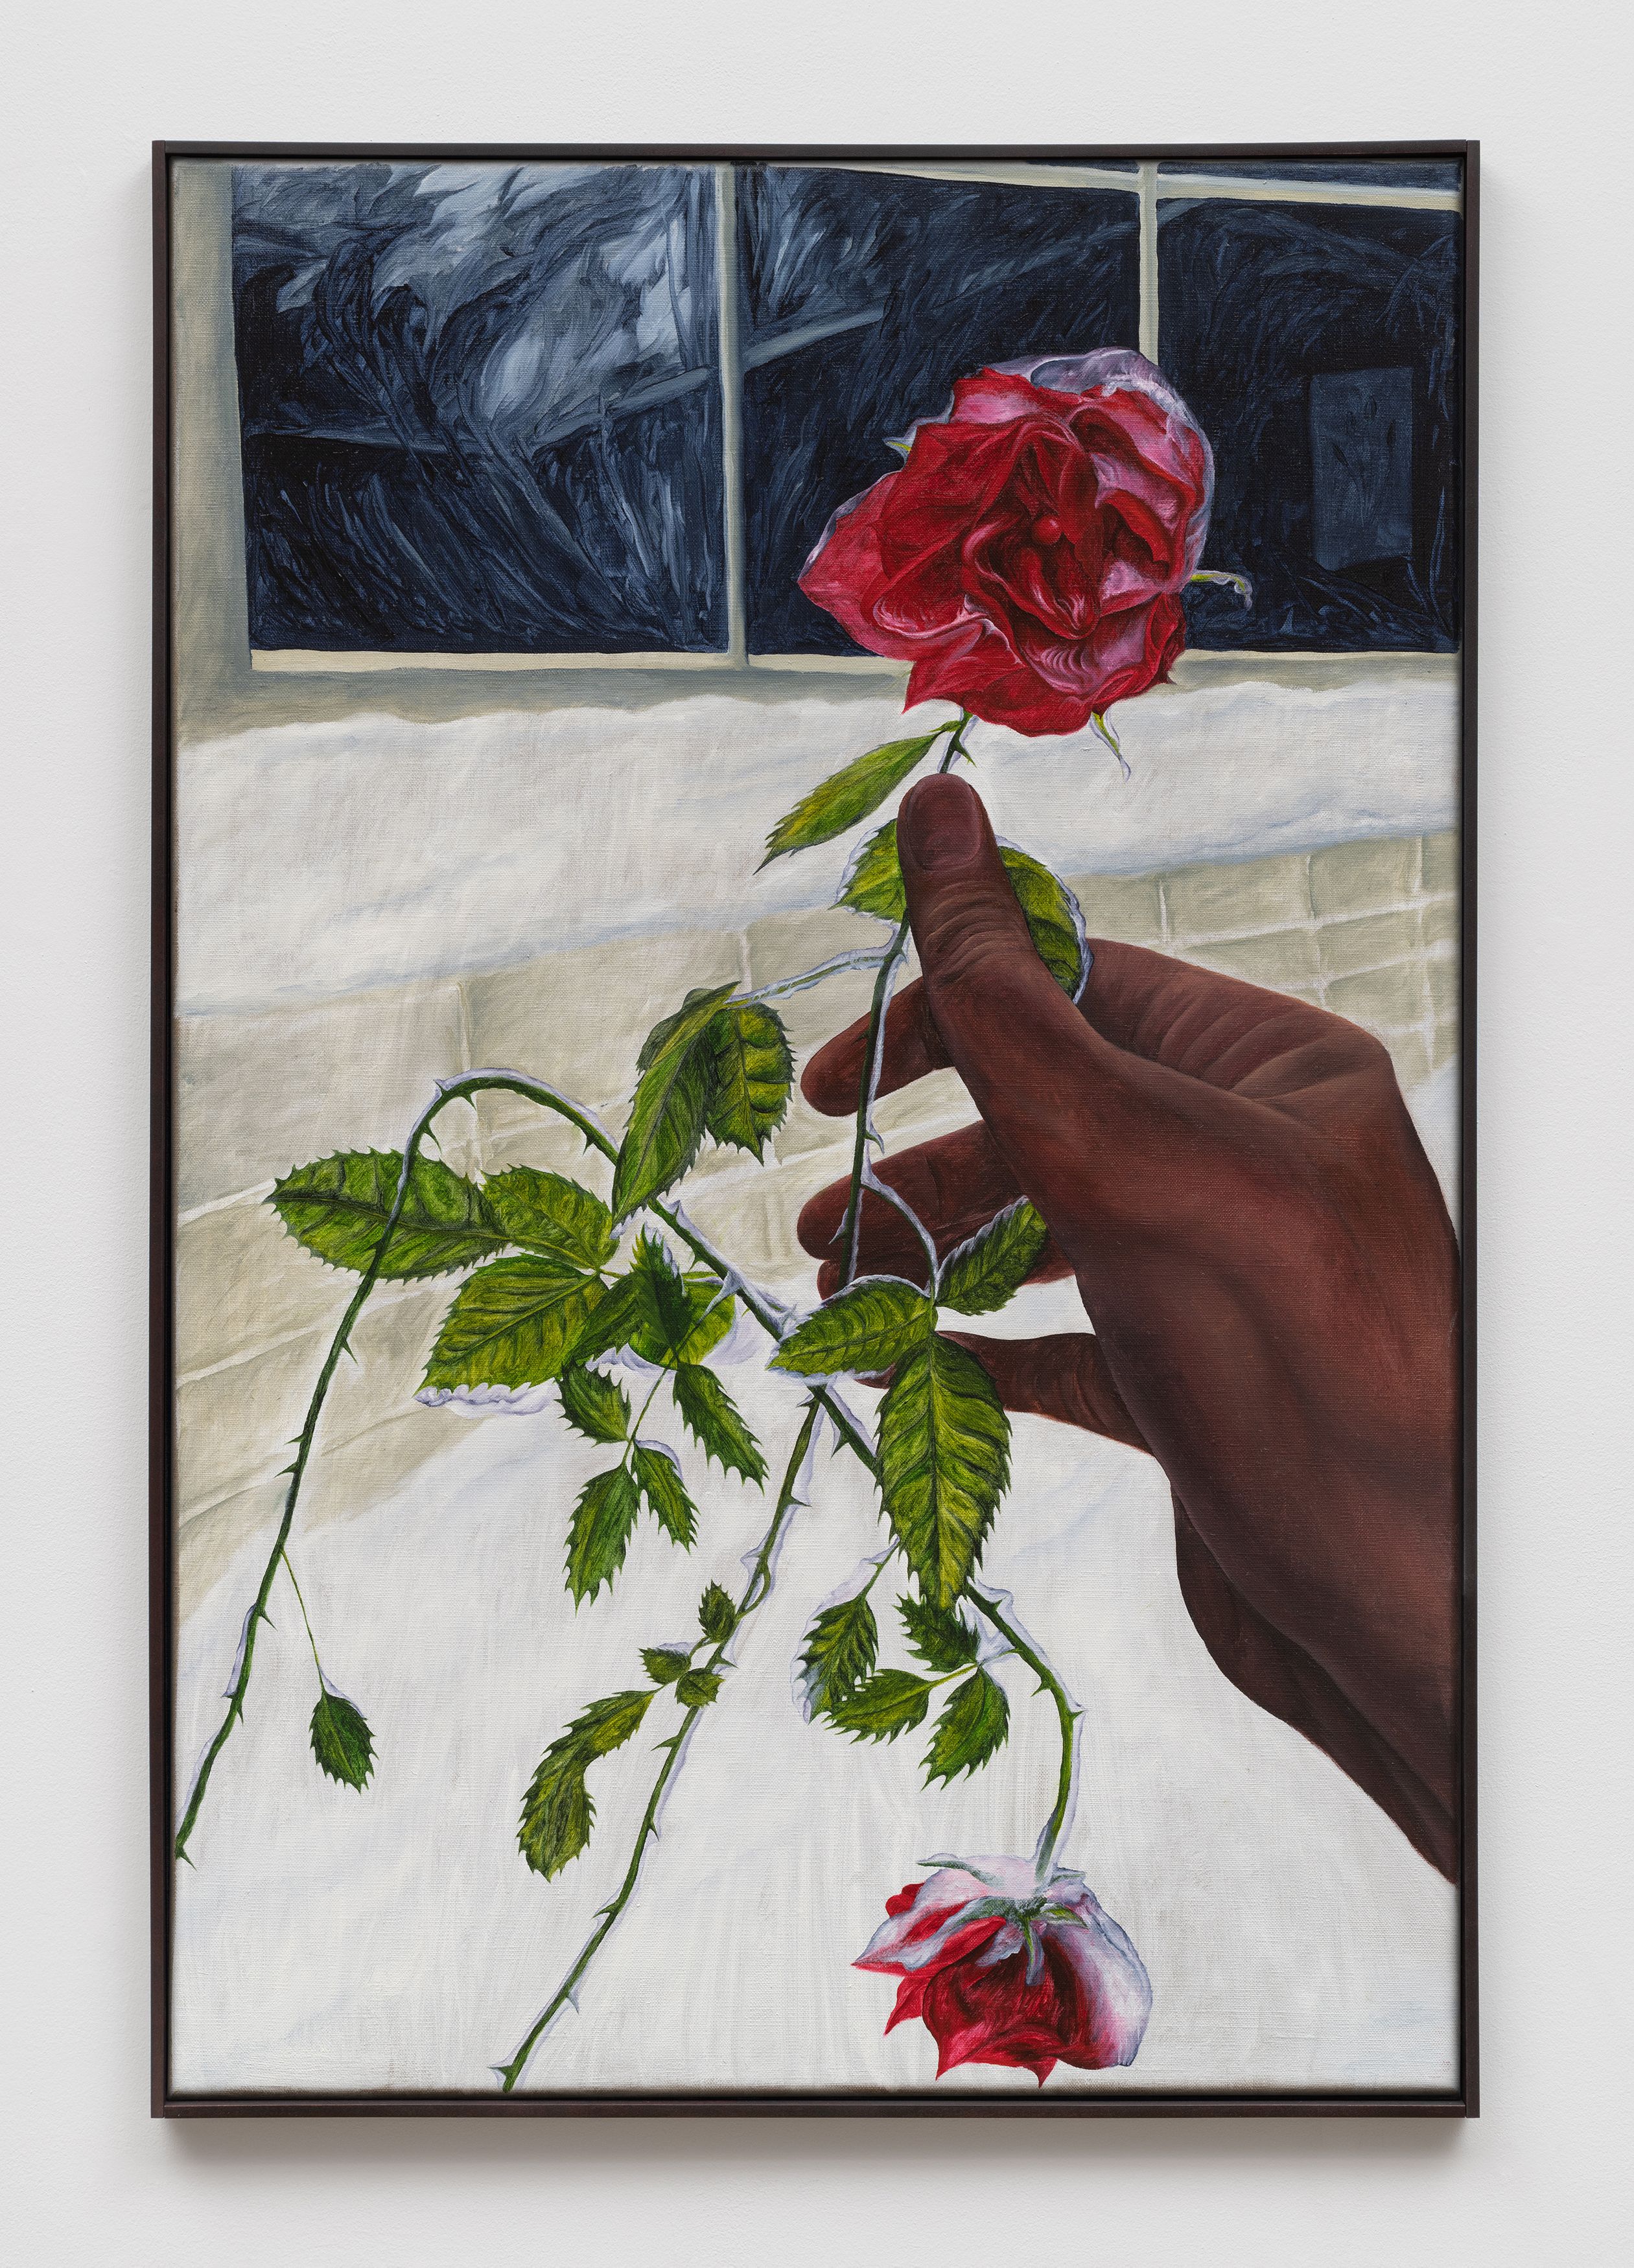 Srijon Chowdhury, Frozen Rose, 2021, oil on linen, 36 x 24 in. (91.44 x 60.96 cm)